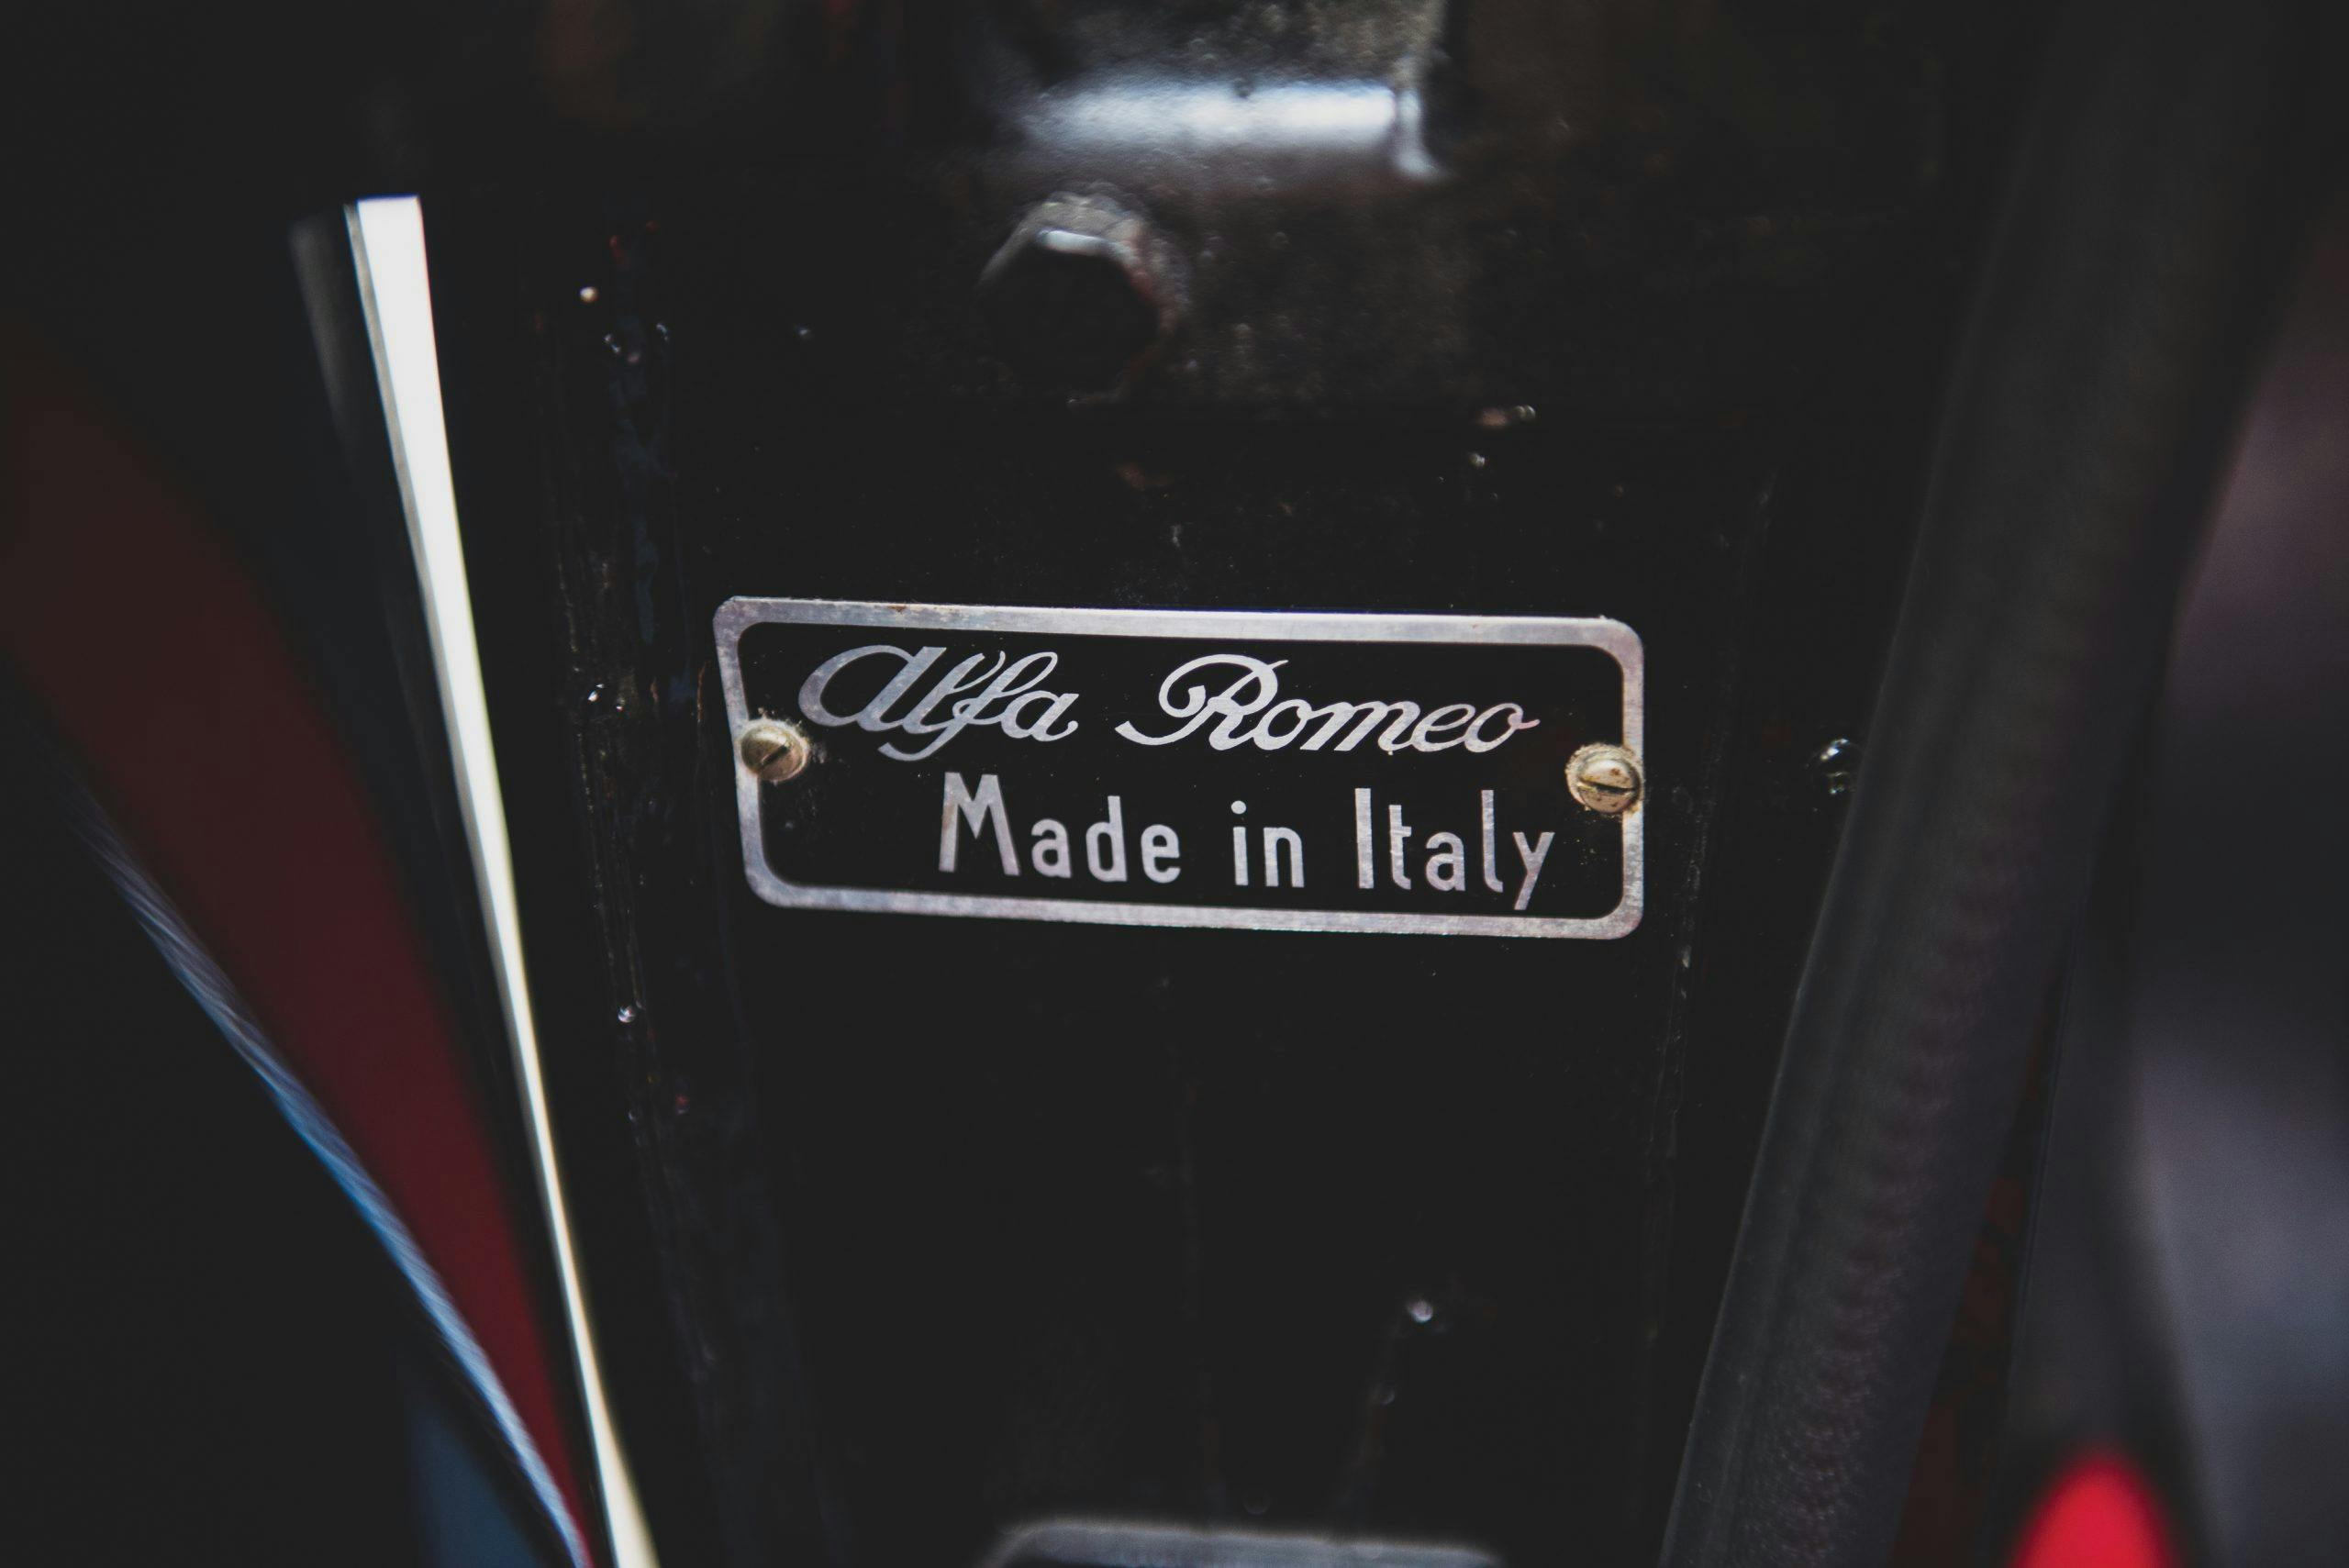 1959 Alfa Romeo Giulietta Spider made in Italy detail